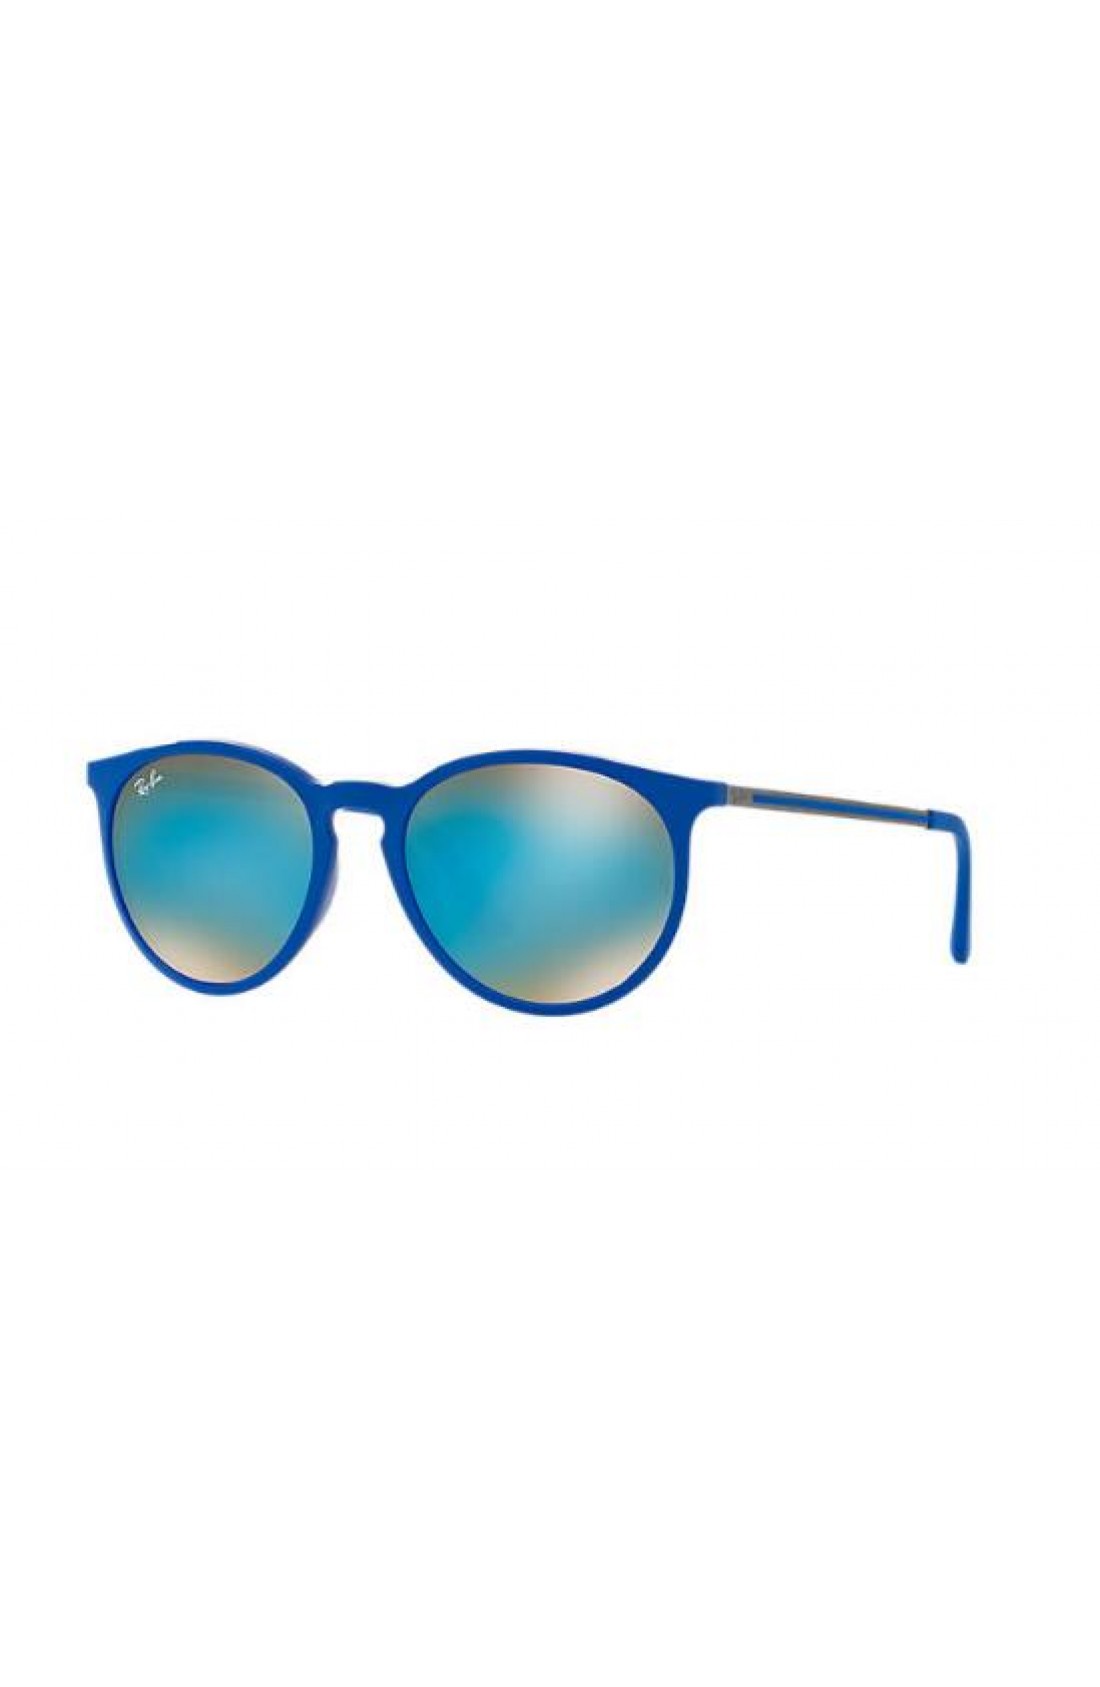 Cheap Ray Ban Rb4274 Erika Sunglasses Blue Frame Blue Gradient Flash Lens For Sale Online